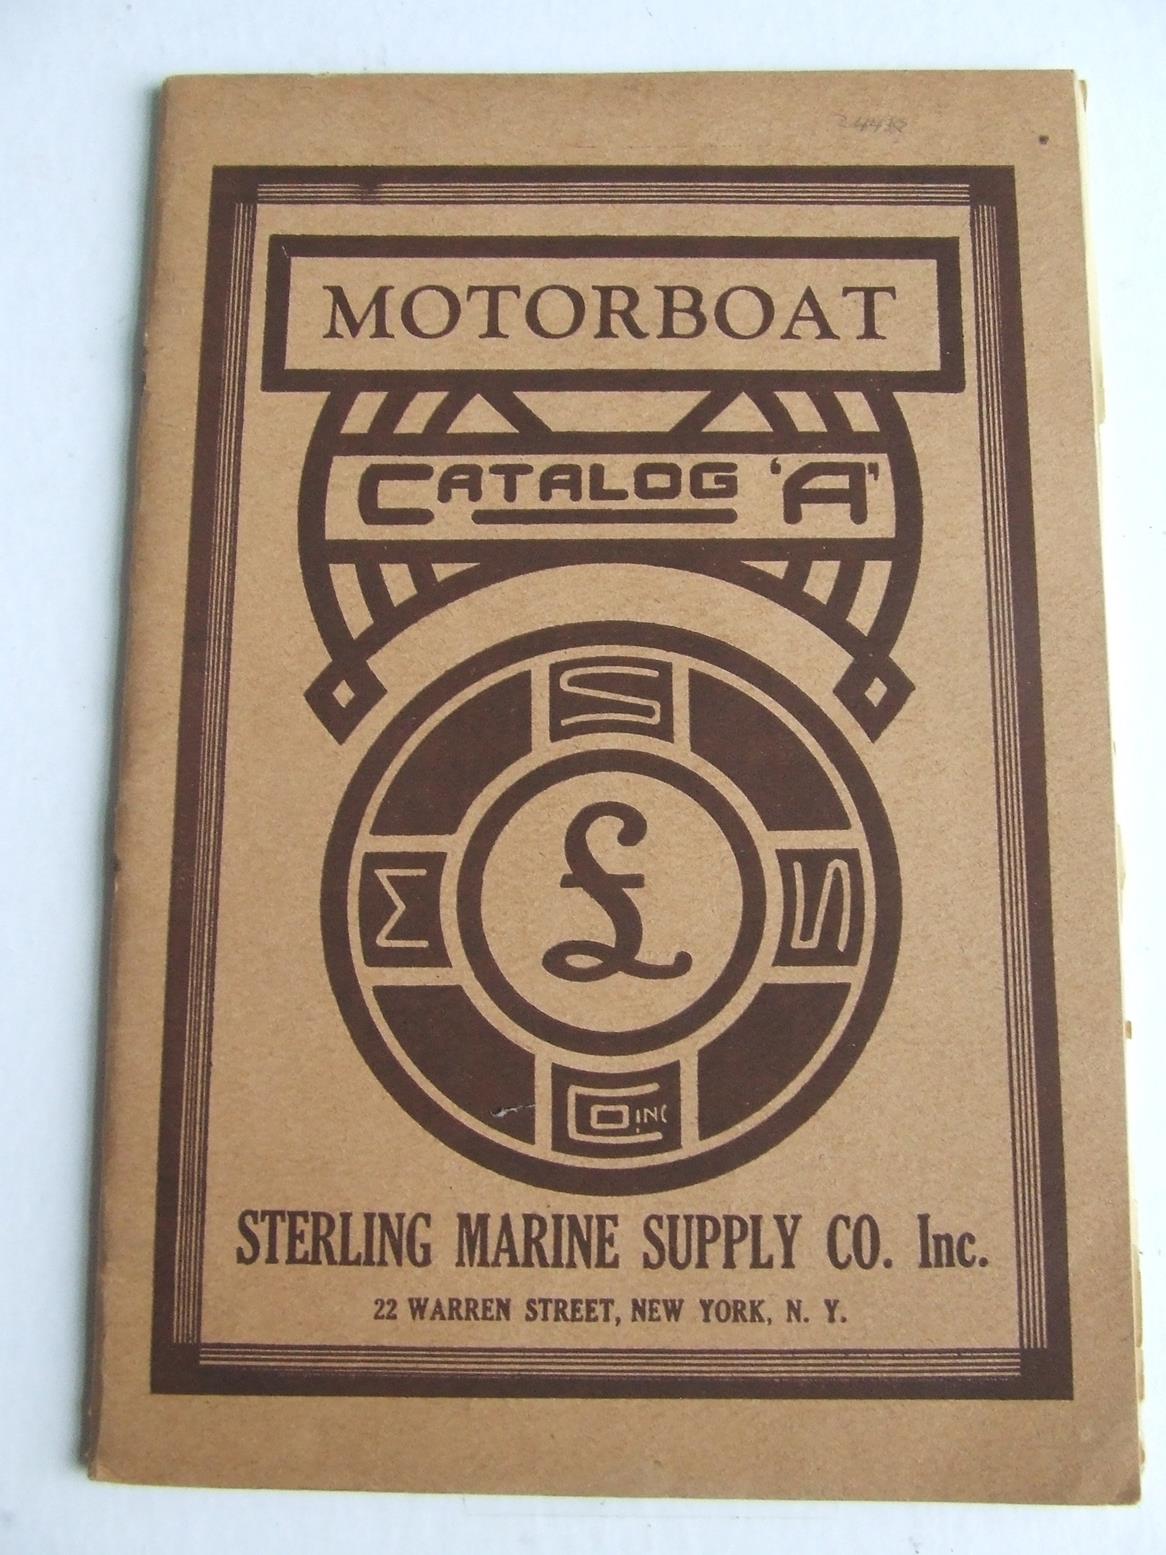 Motorboat, Catalog 'A'.